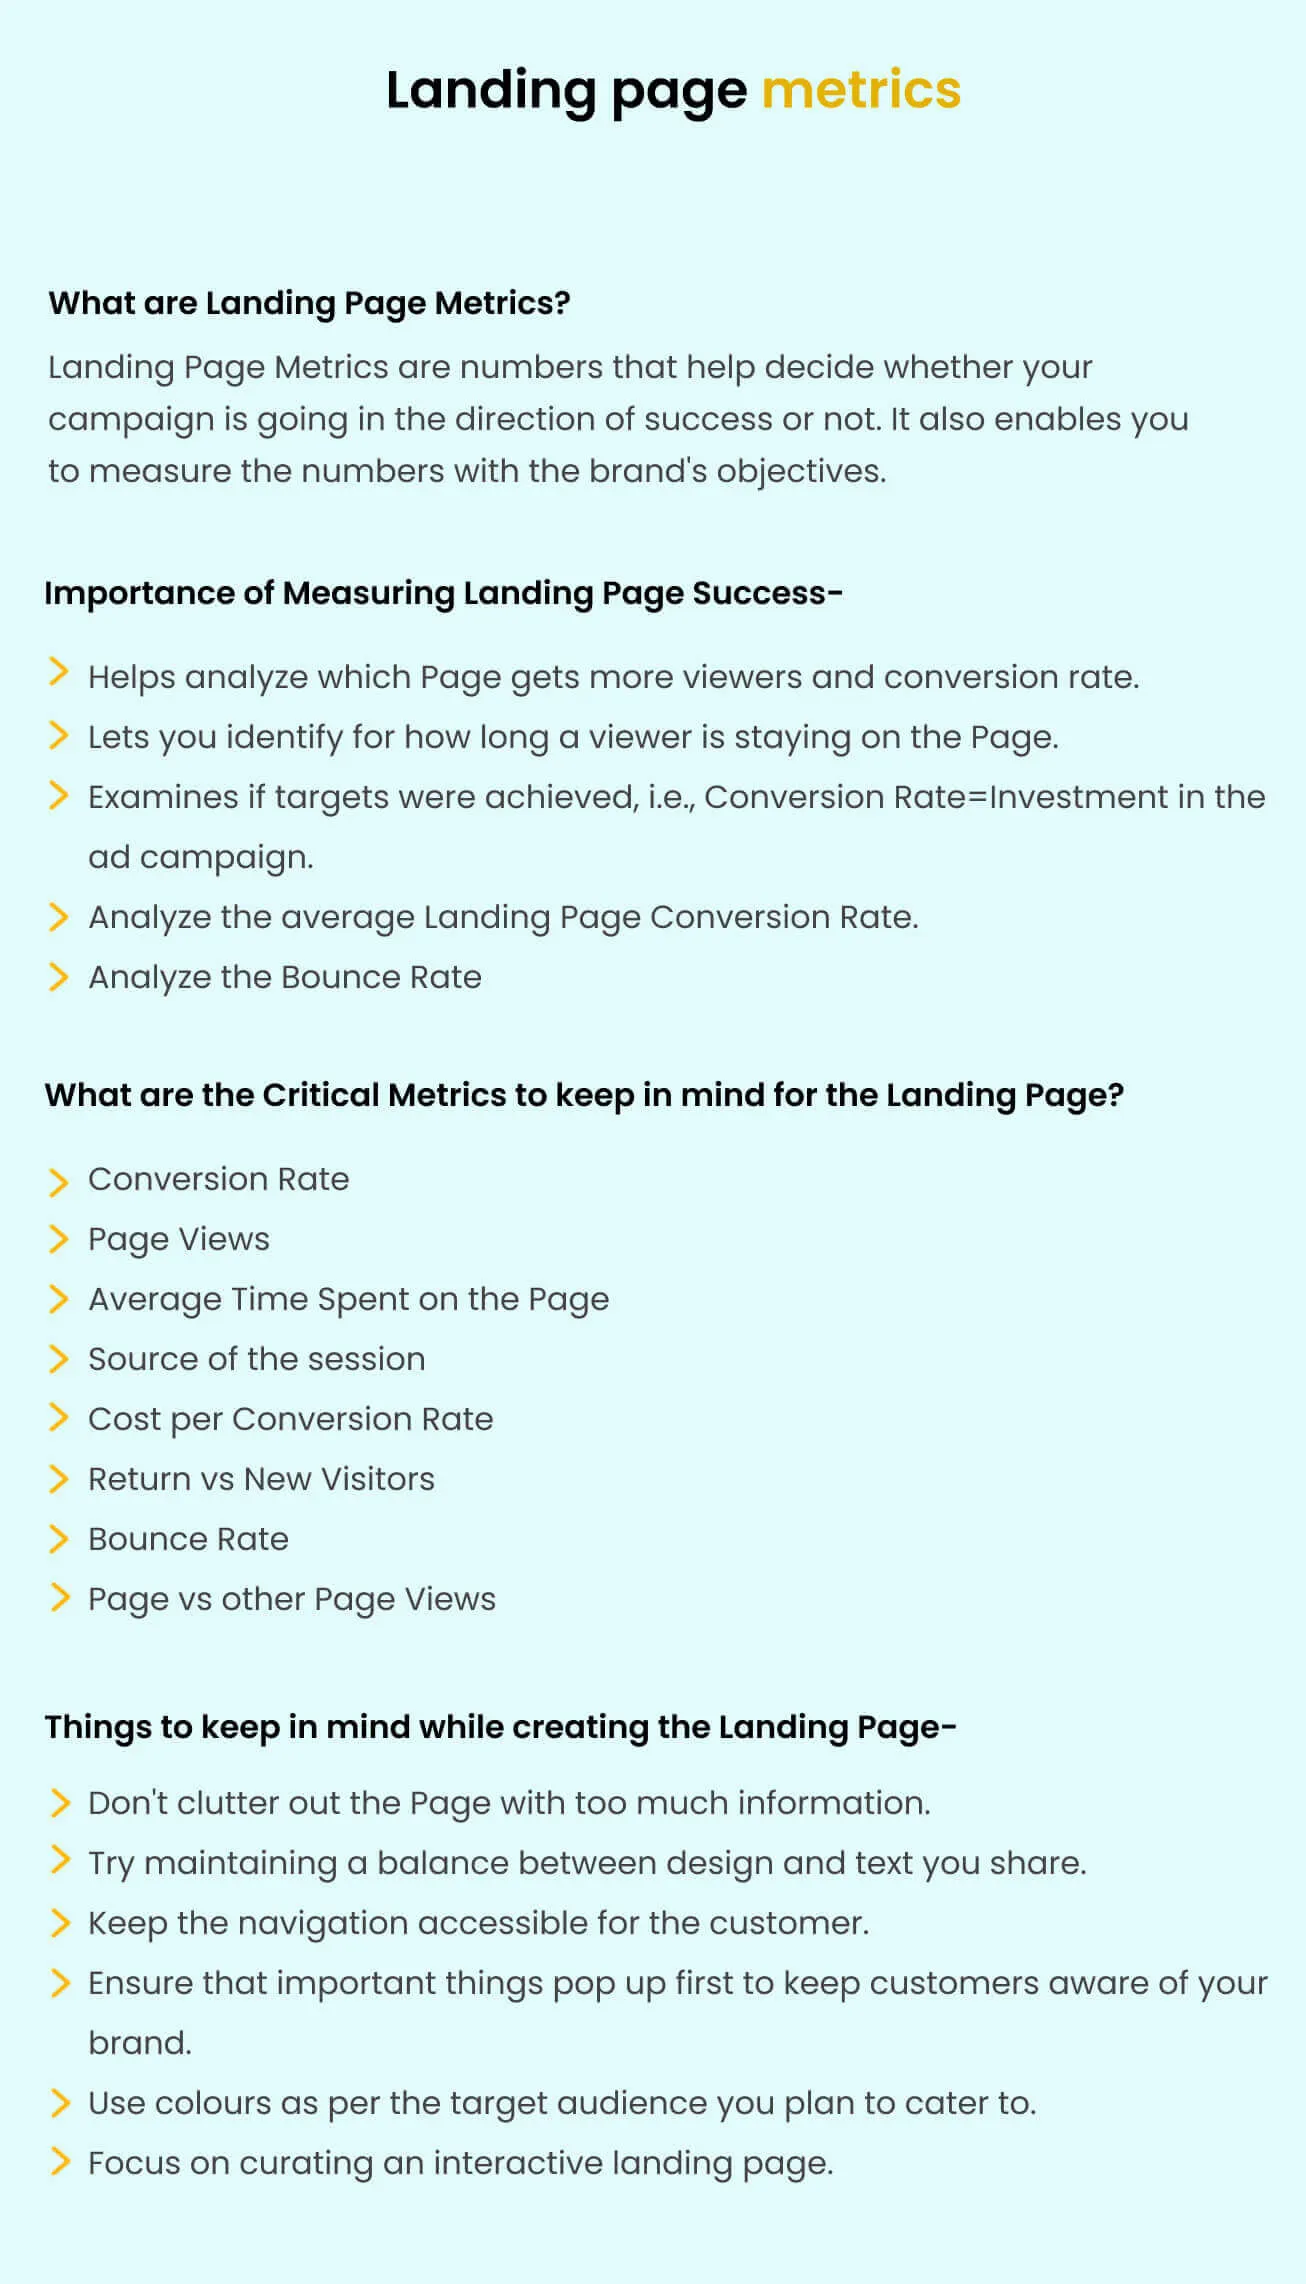 Landing-Page-Metric-Summary-blog-image.webp